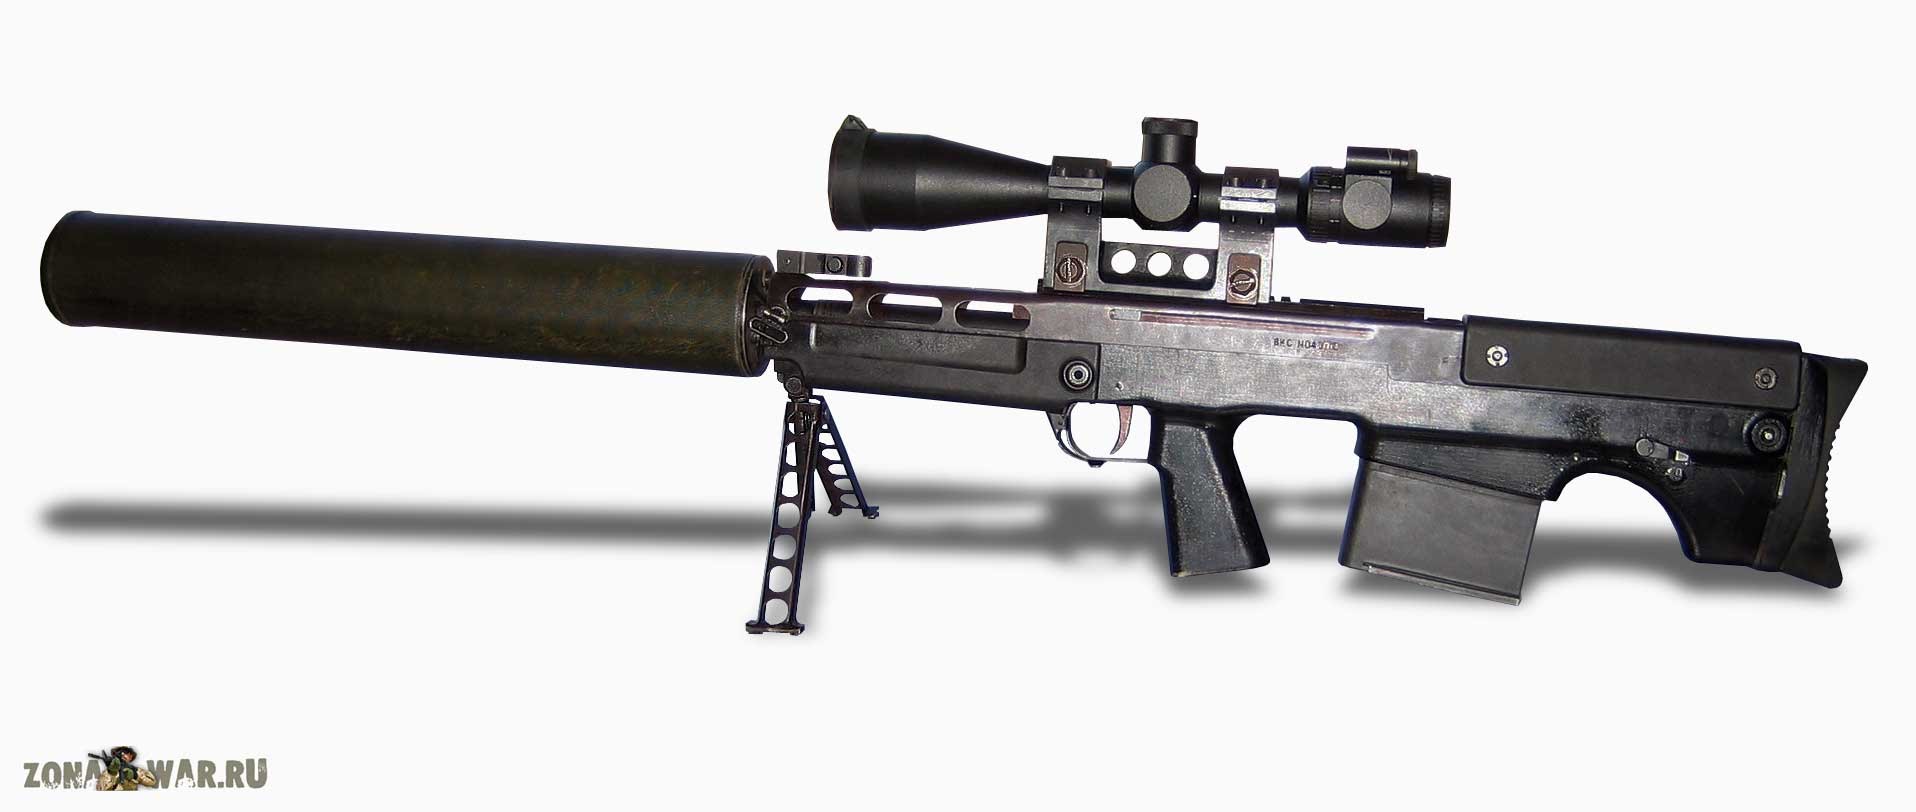 Sniper Rifle #22